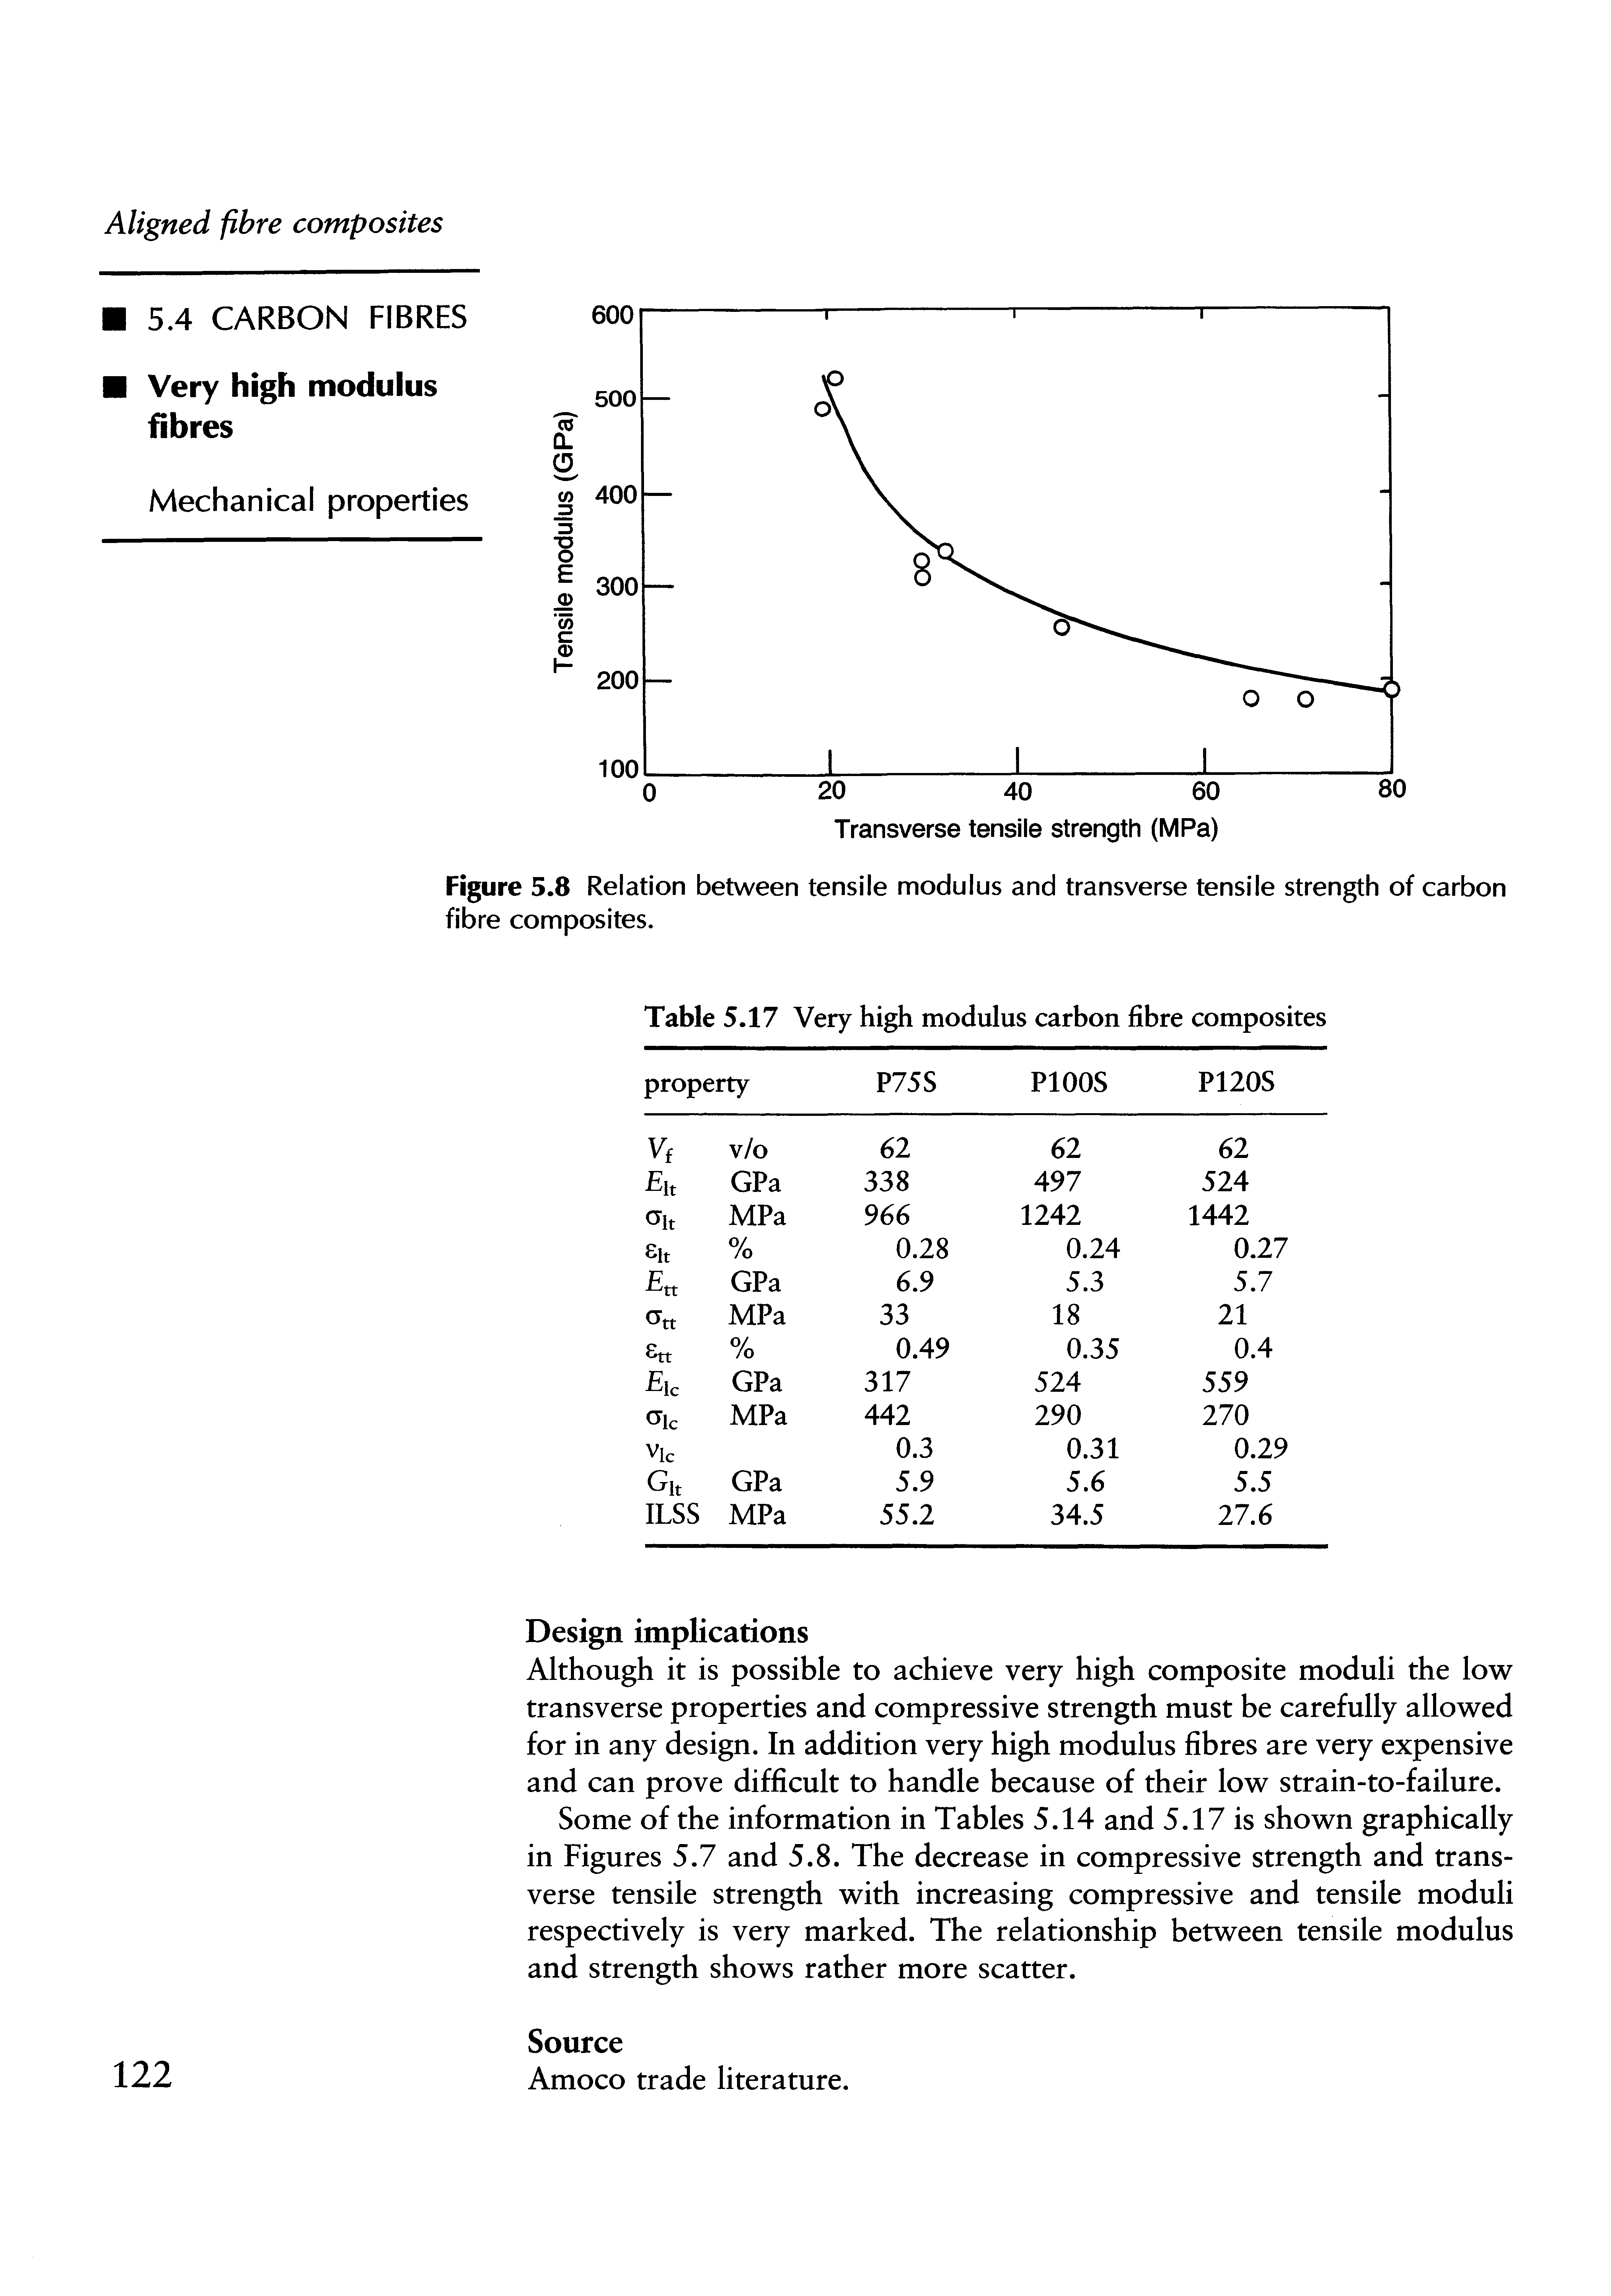 Figure 5.8 Relation between tensile modulus and transverse tensile strength of carbon fibre composites.